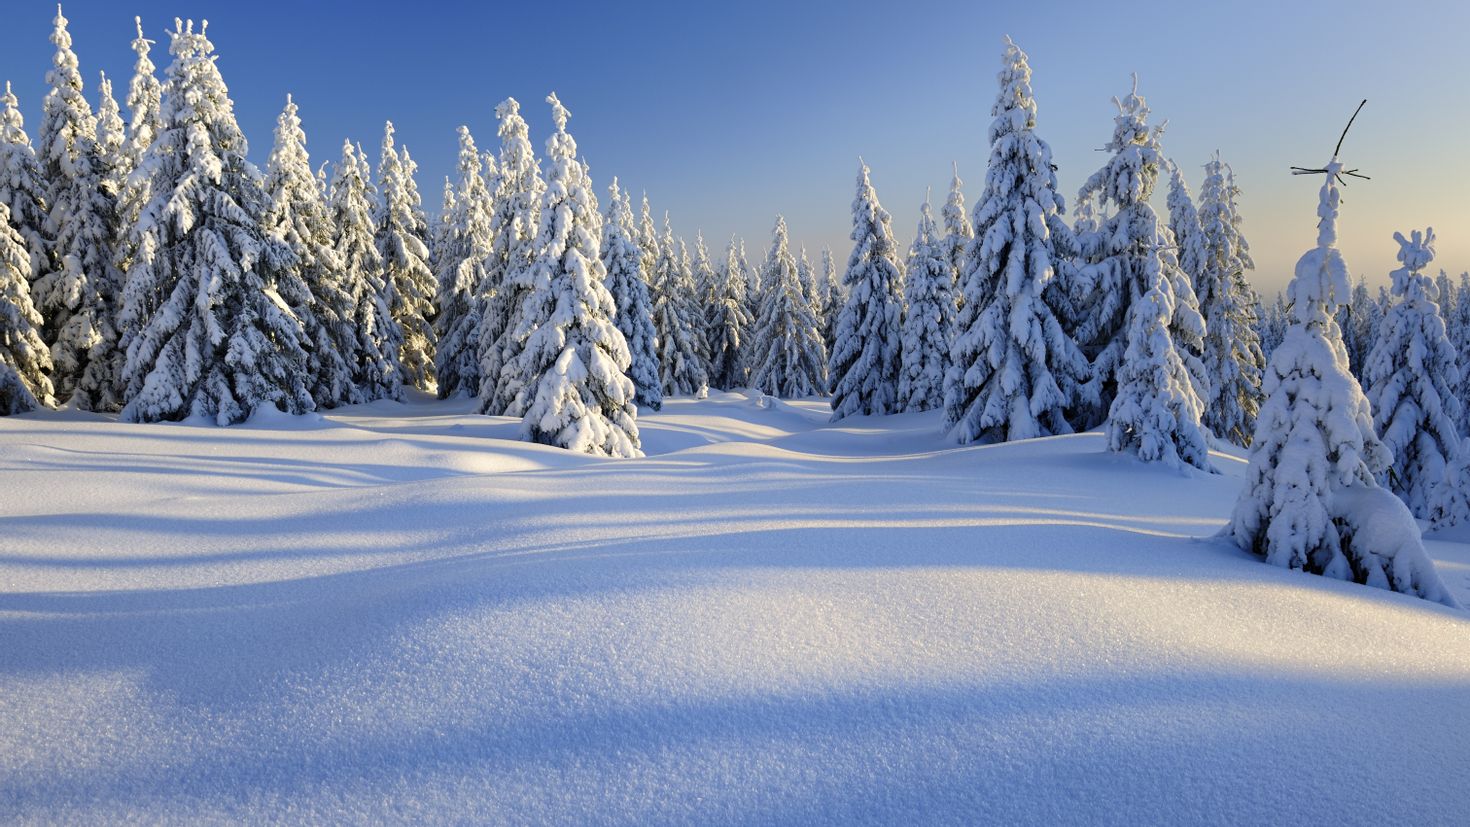 Красивая картинка со снегом. Зимний лес. Зимний пейзаж. Красивая зима. Зимняя природа.